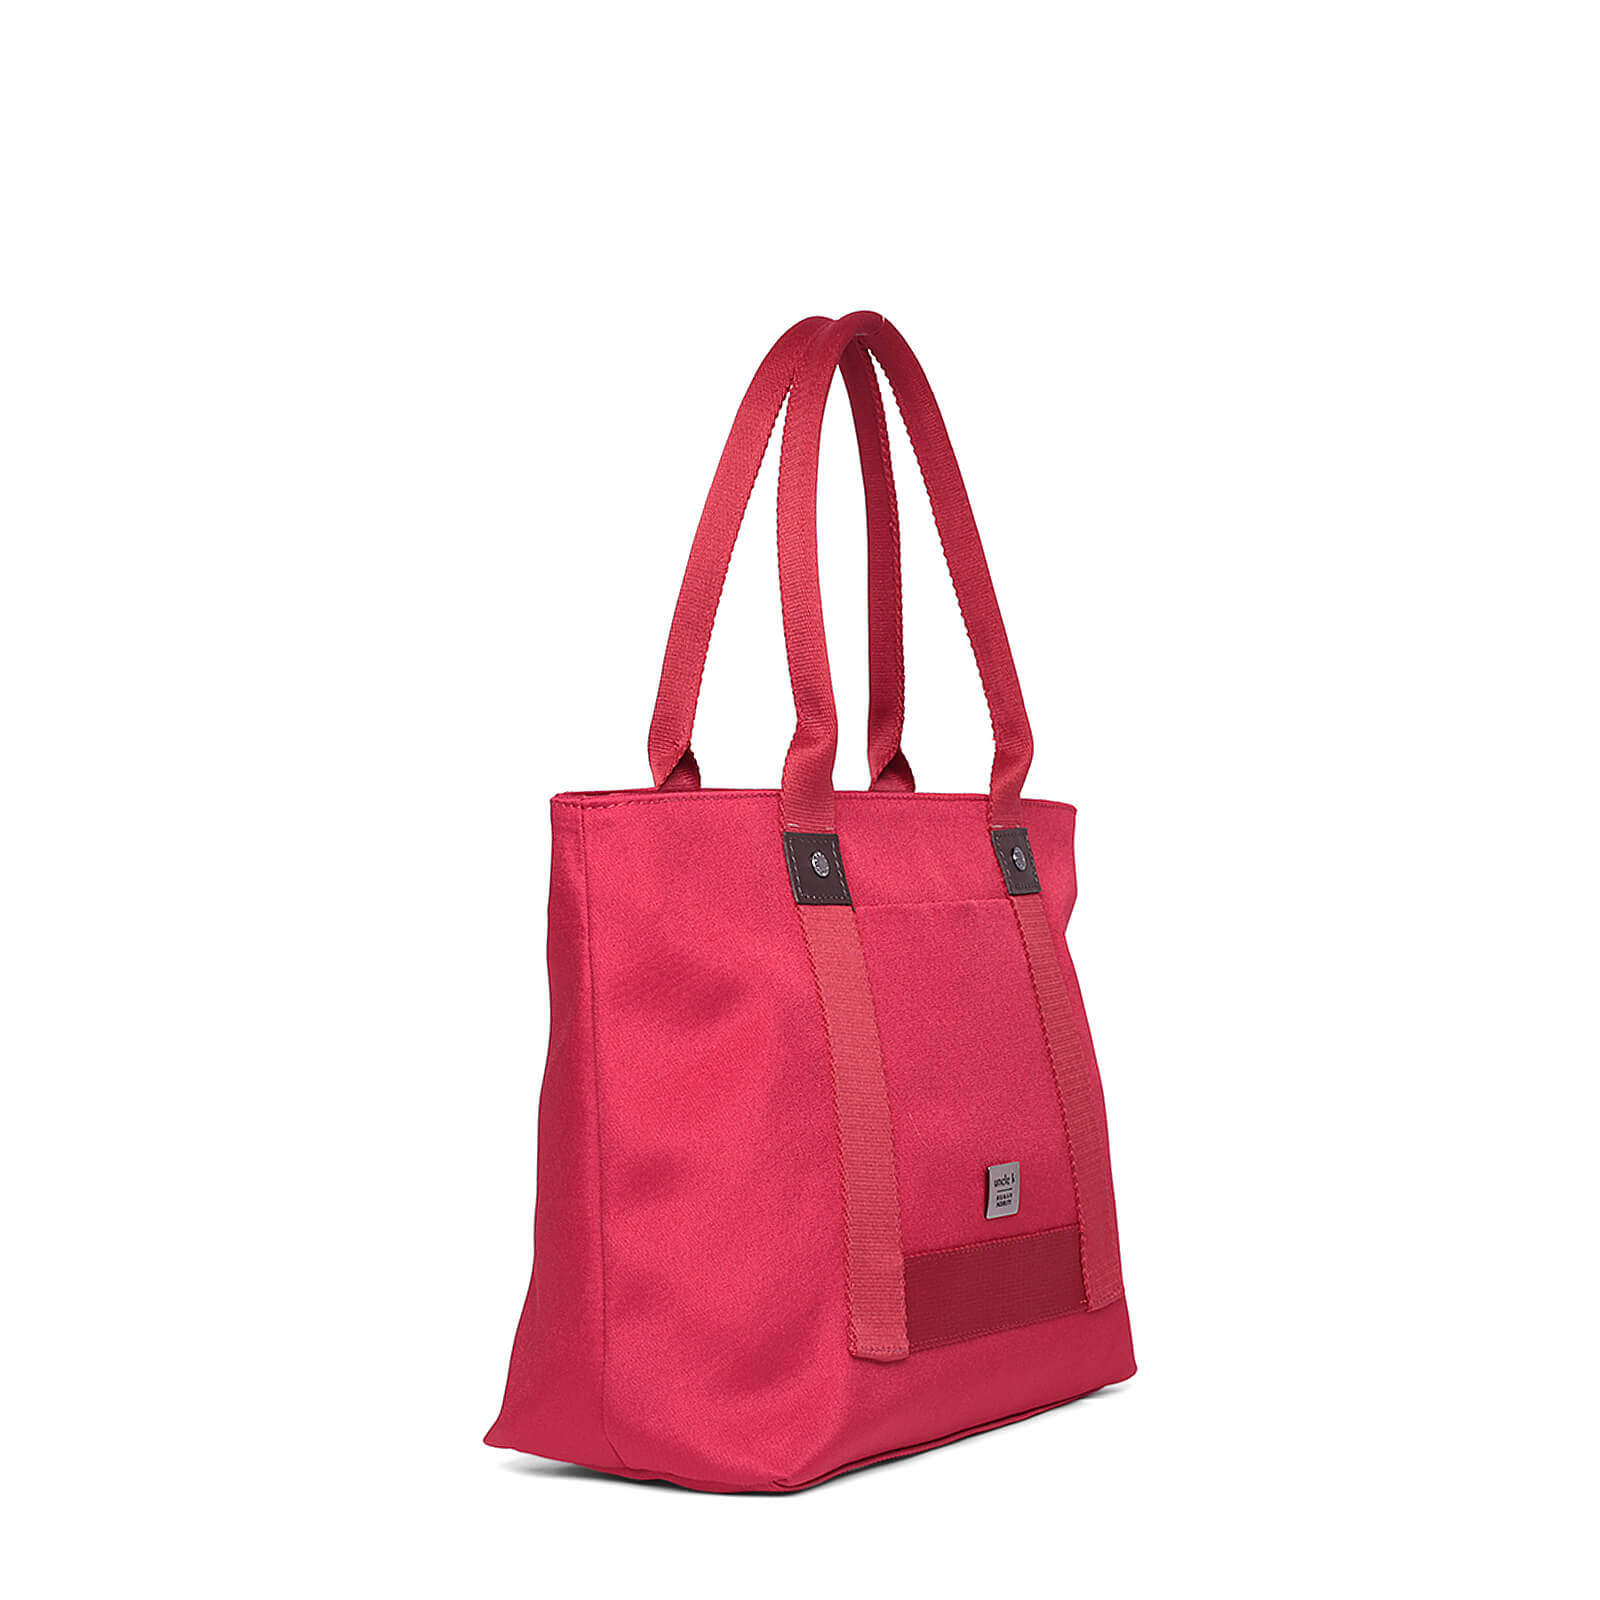 bolsa-shopping-bag-nylon-61092-v24-unclek-vermelho-2